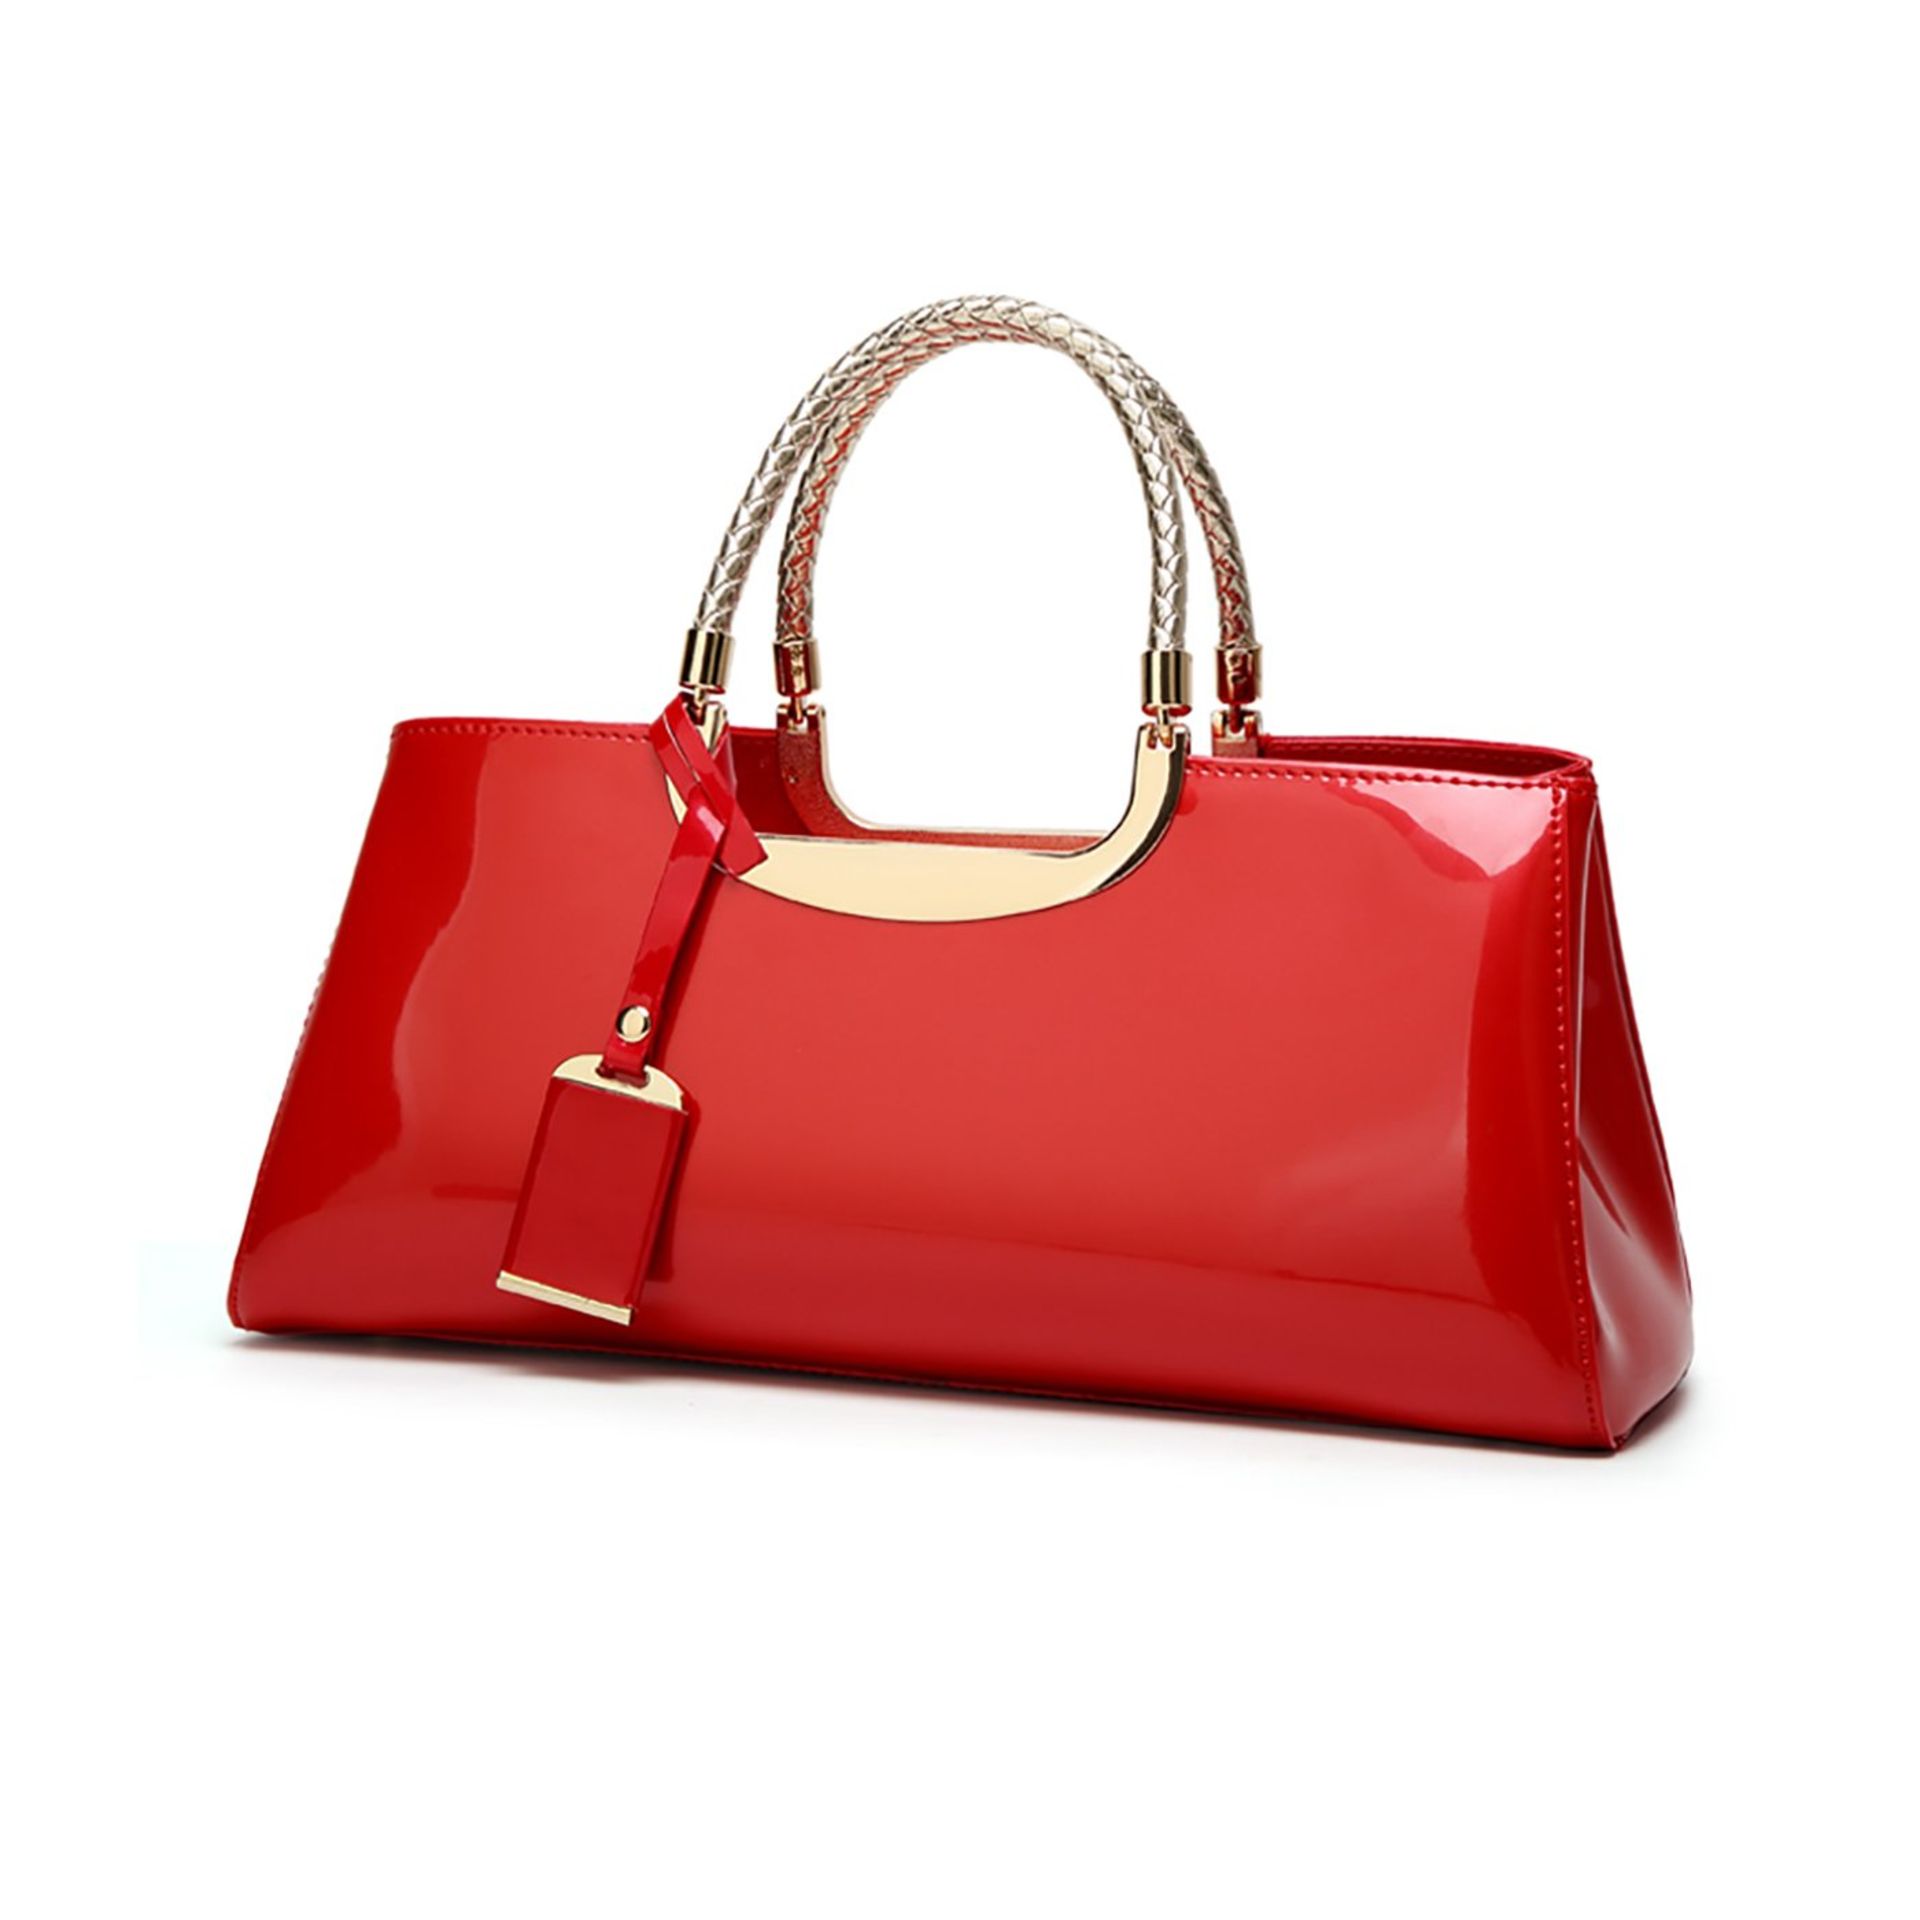 Brand New Women's Coolives Light Golden Strap Red Handbag RRP £39.99